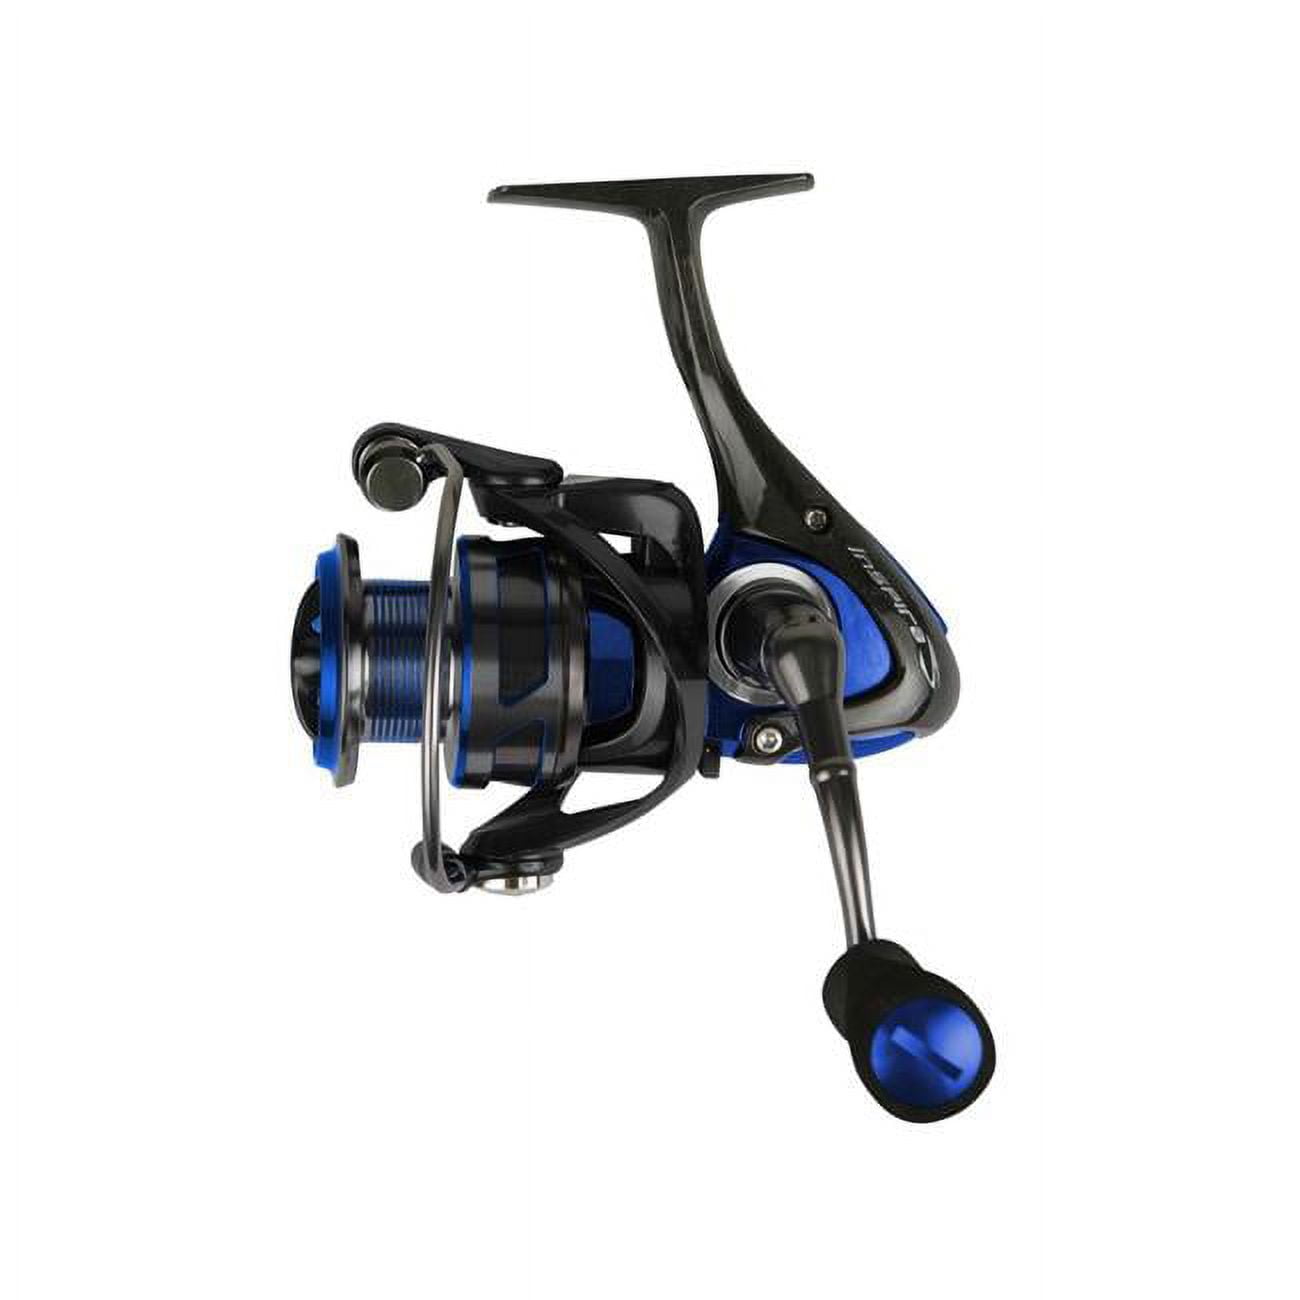 SportsmansSupply YCS 5001594 Okuma Inspira Spinning Reel, Blue - Size 20